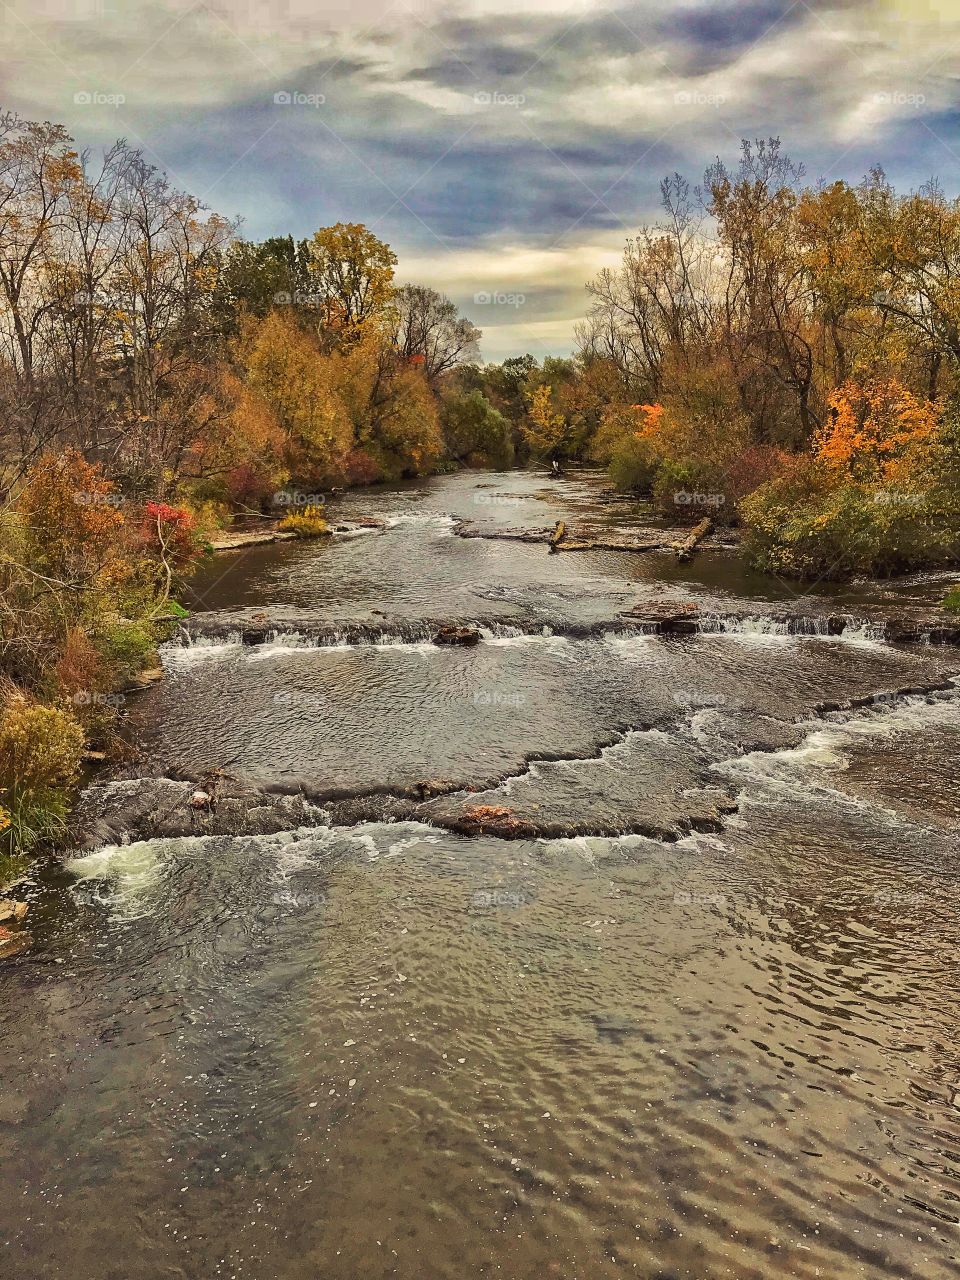 Ellicott creek fall foliage